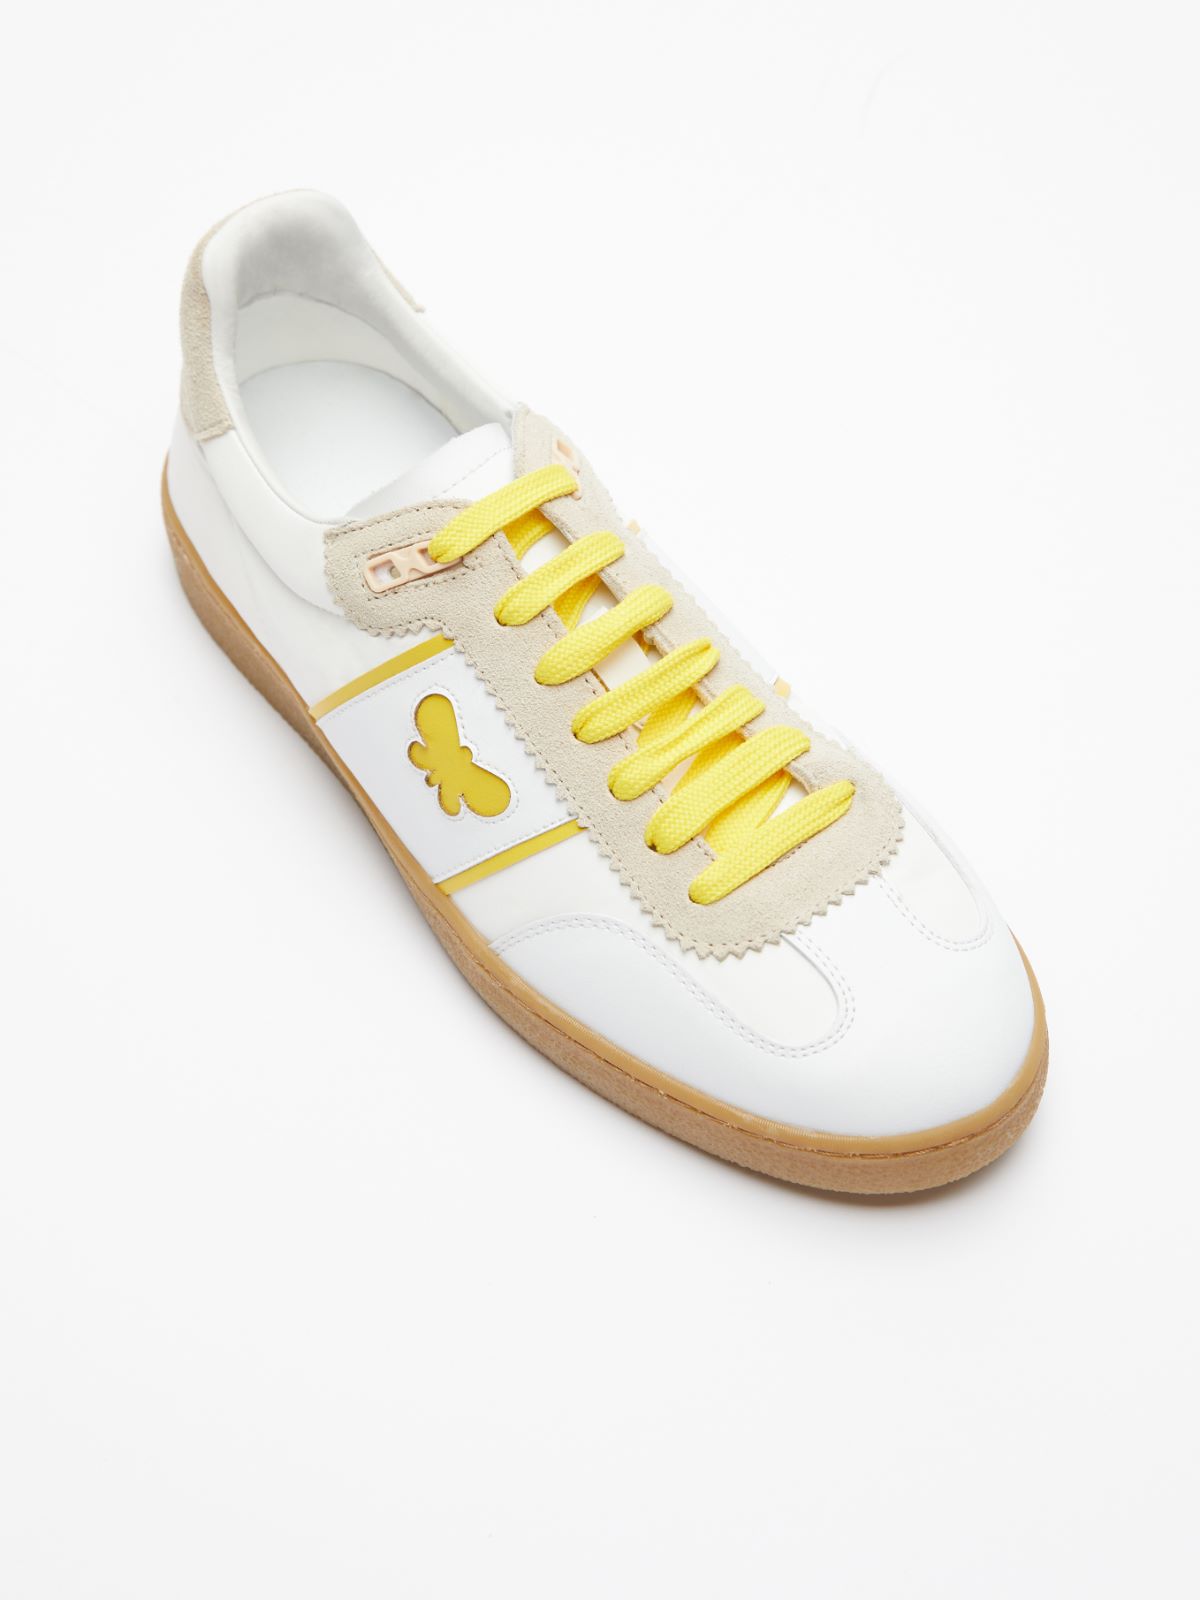 Sneakers in tessuto tecnico e pelle - GIALLO SOLE - Weekend Max Mara - 6